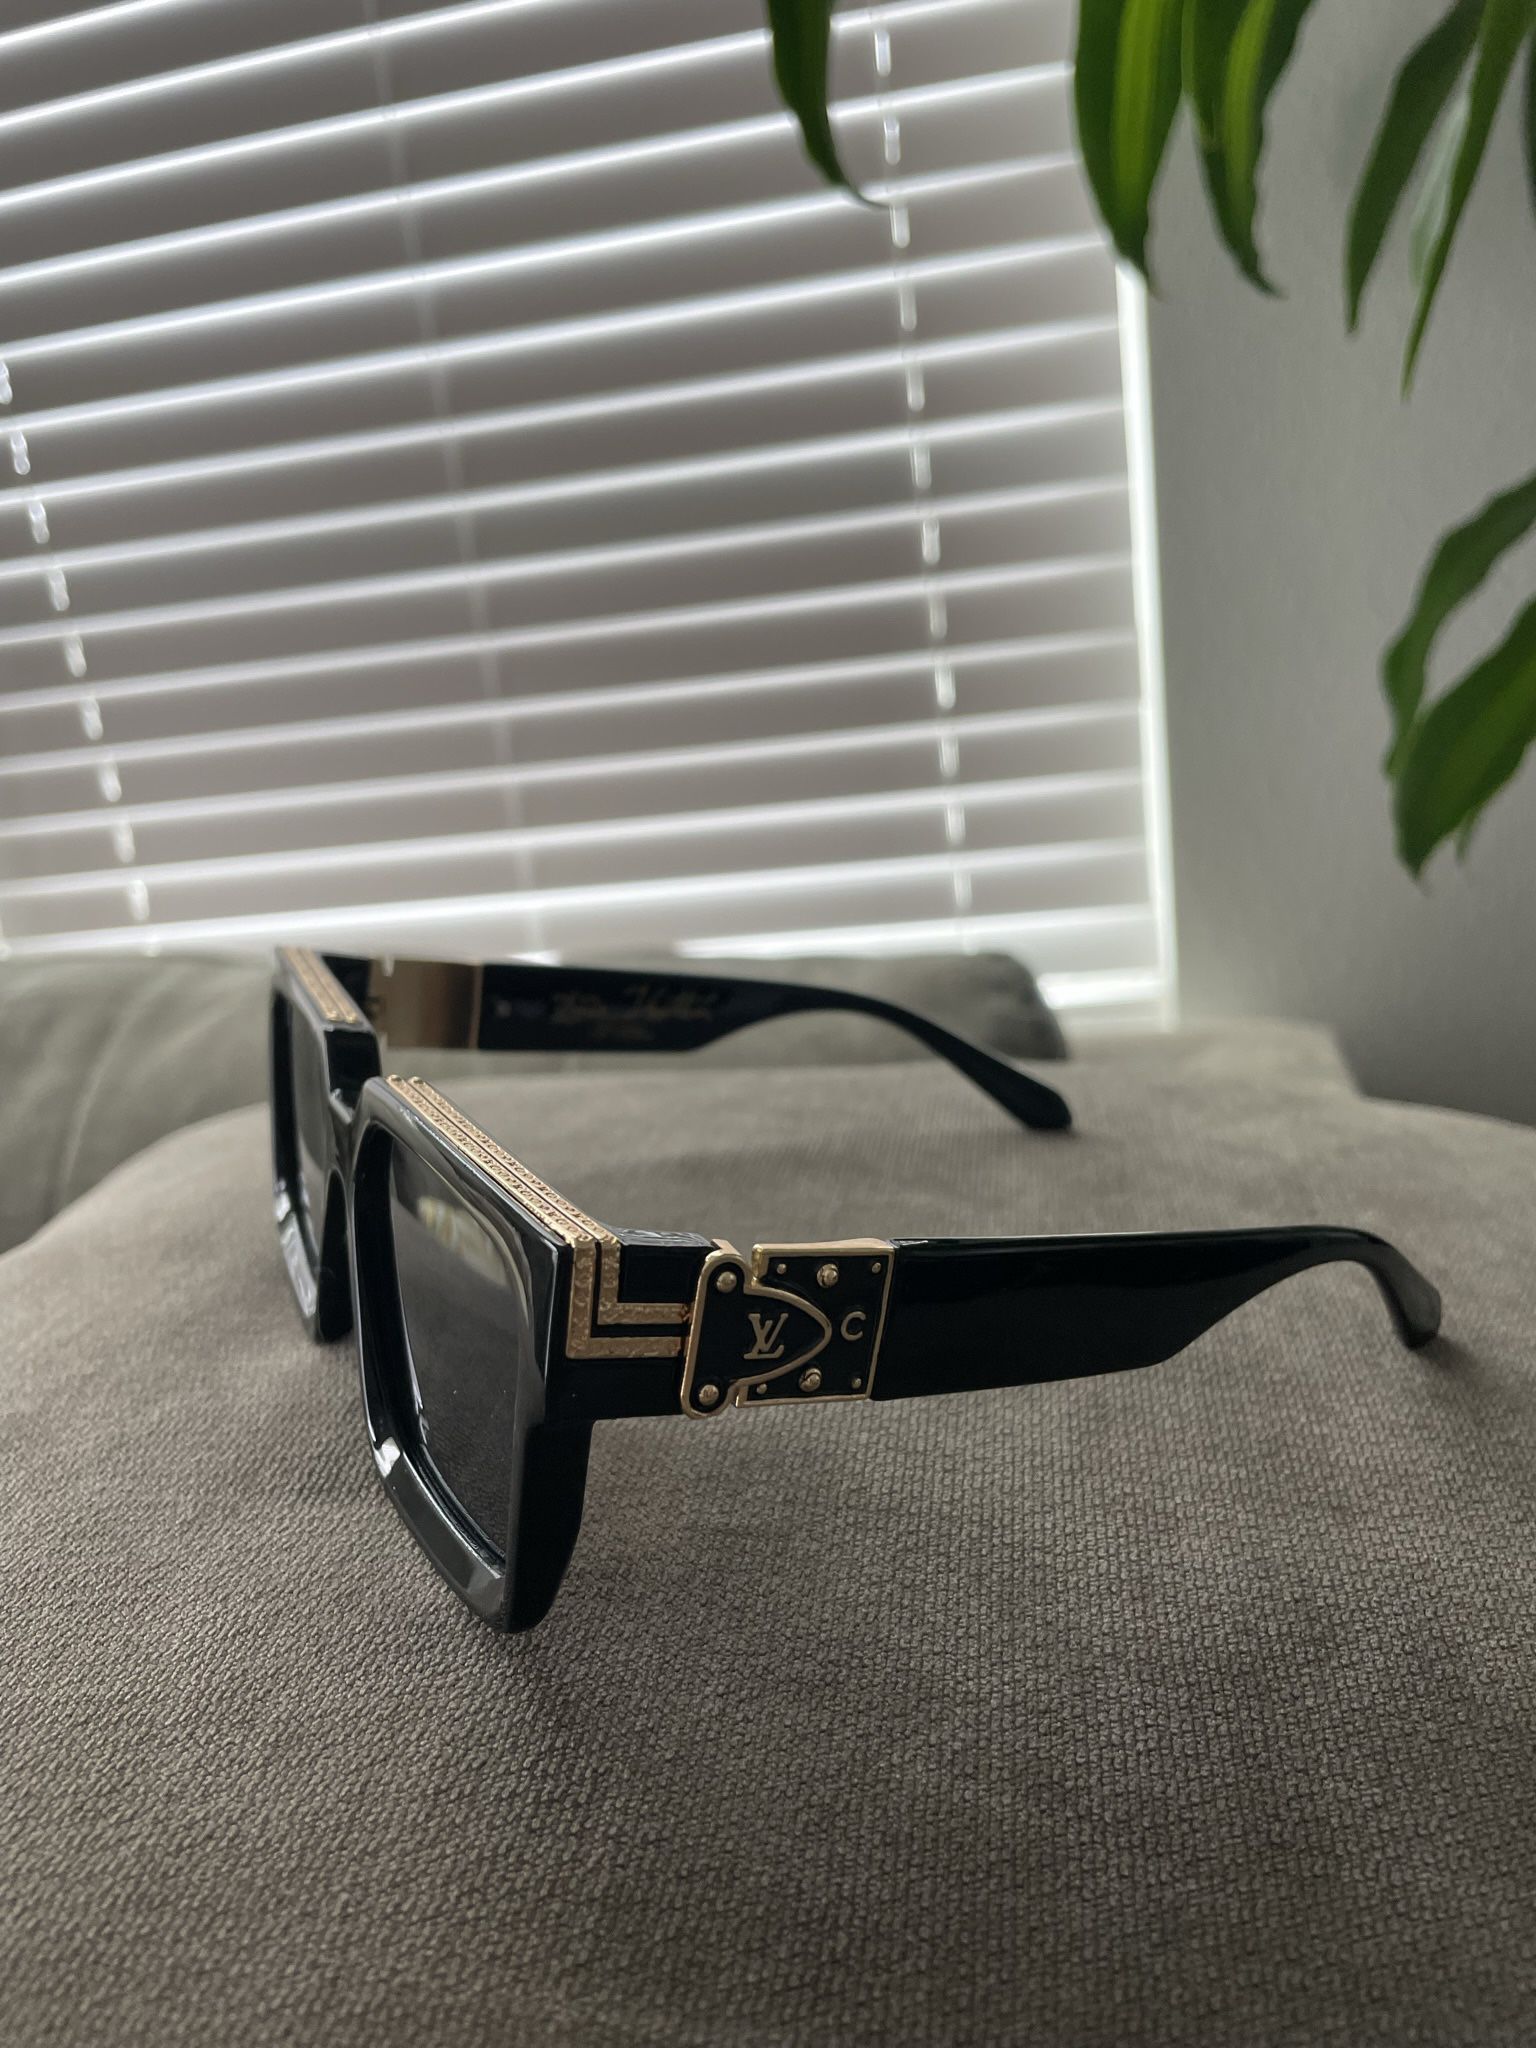 Sell Louis Vuitton Millionaire Sunglasses - Black